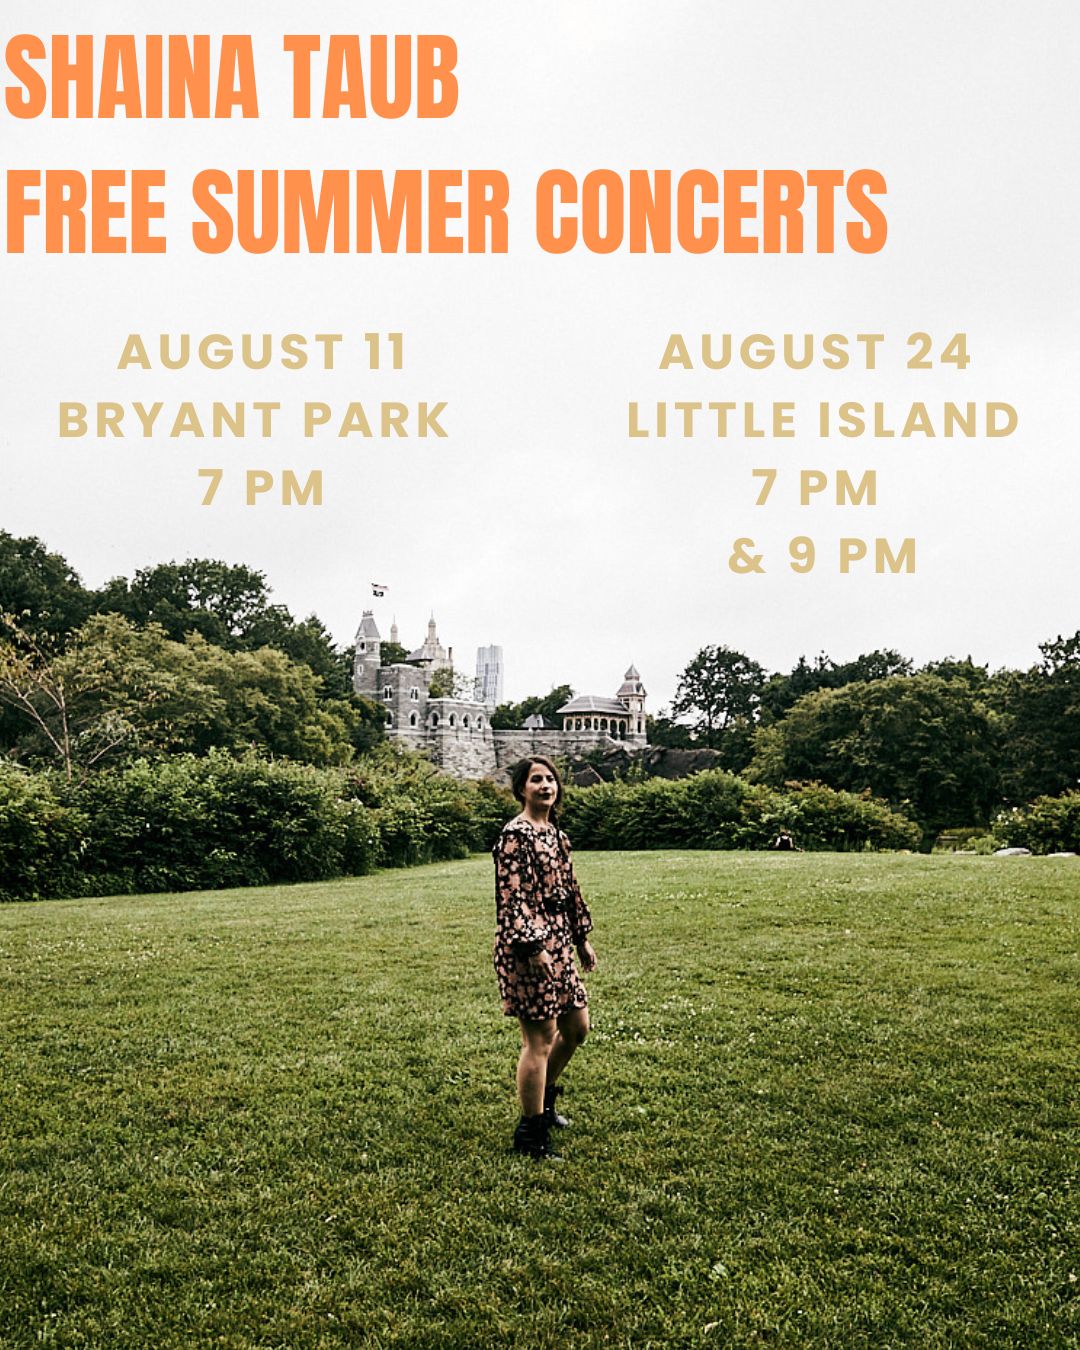 Shaina Taub Free Summer Concerts